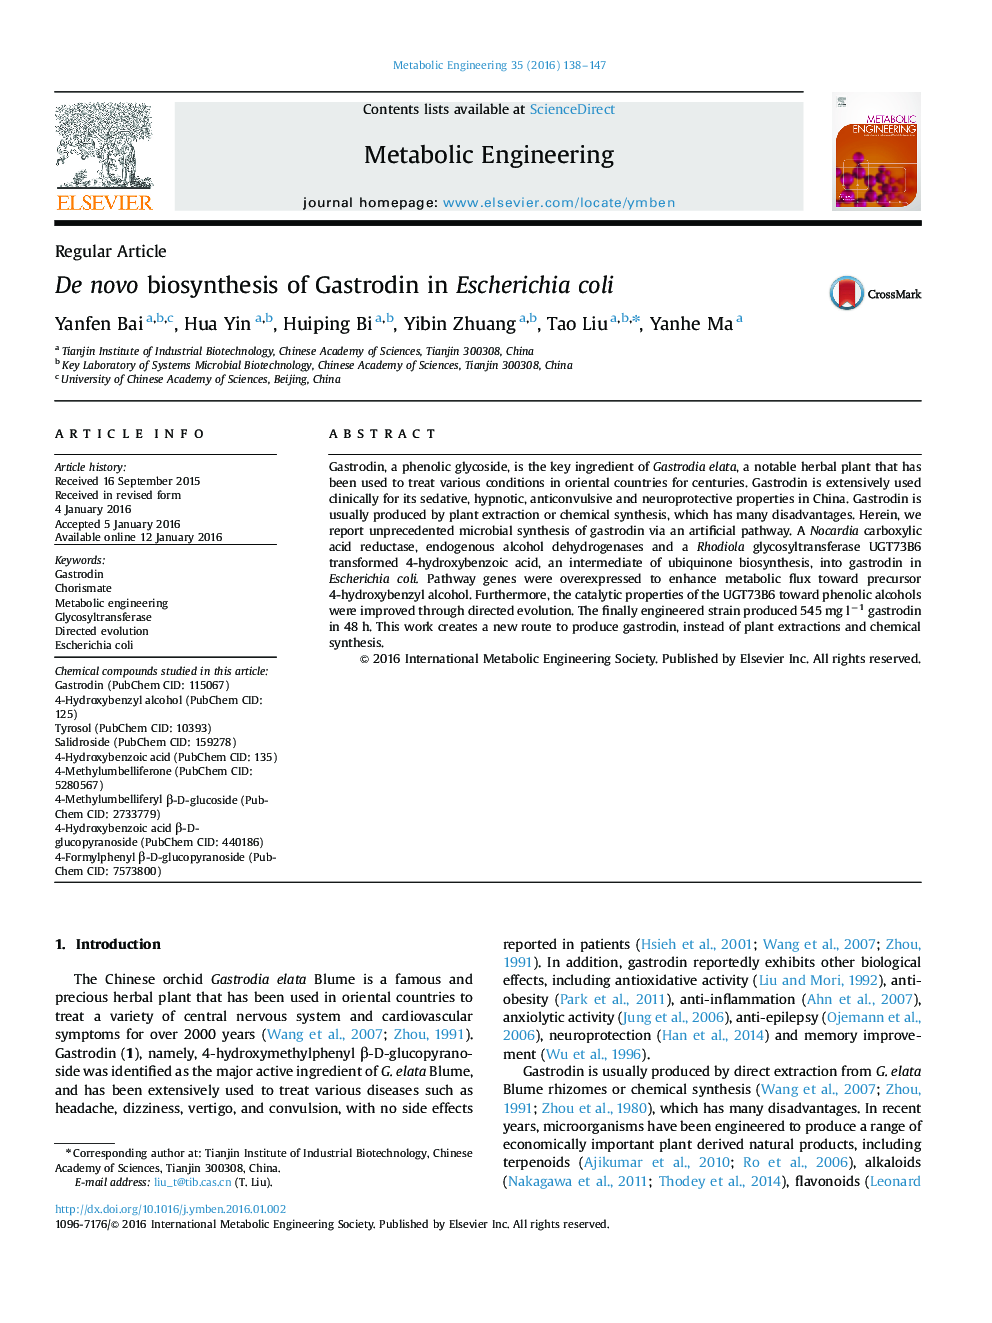 De novo biosynthesis of Gastrodin in Escherichia coli